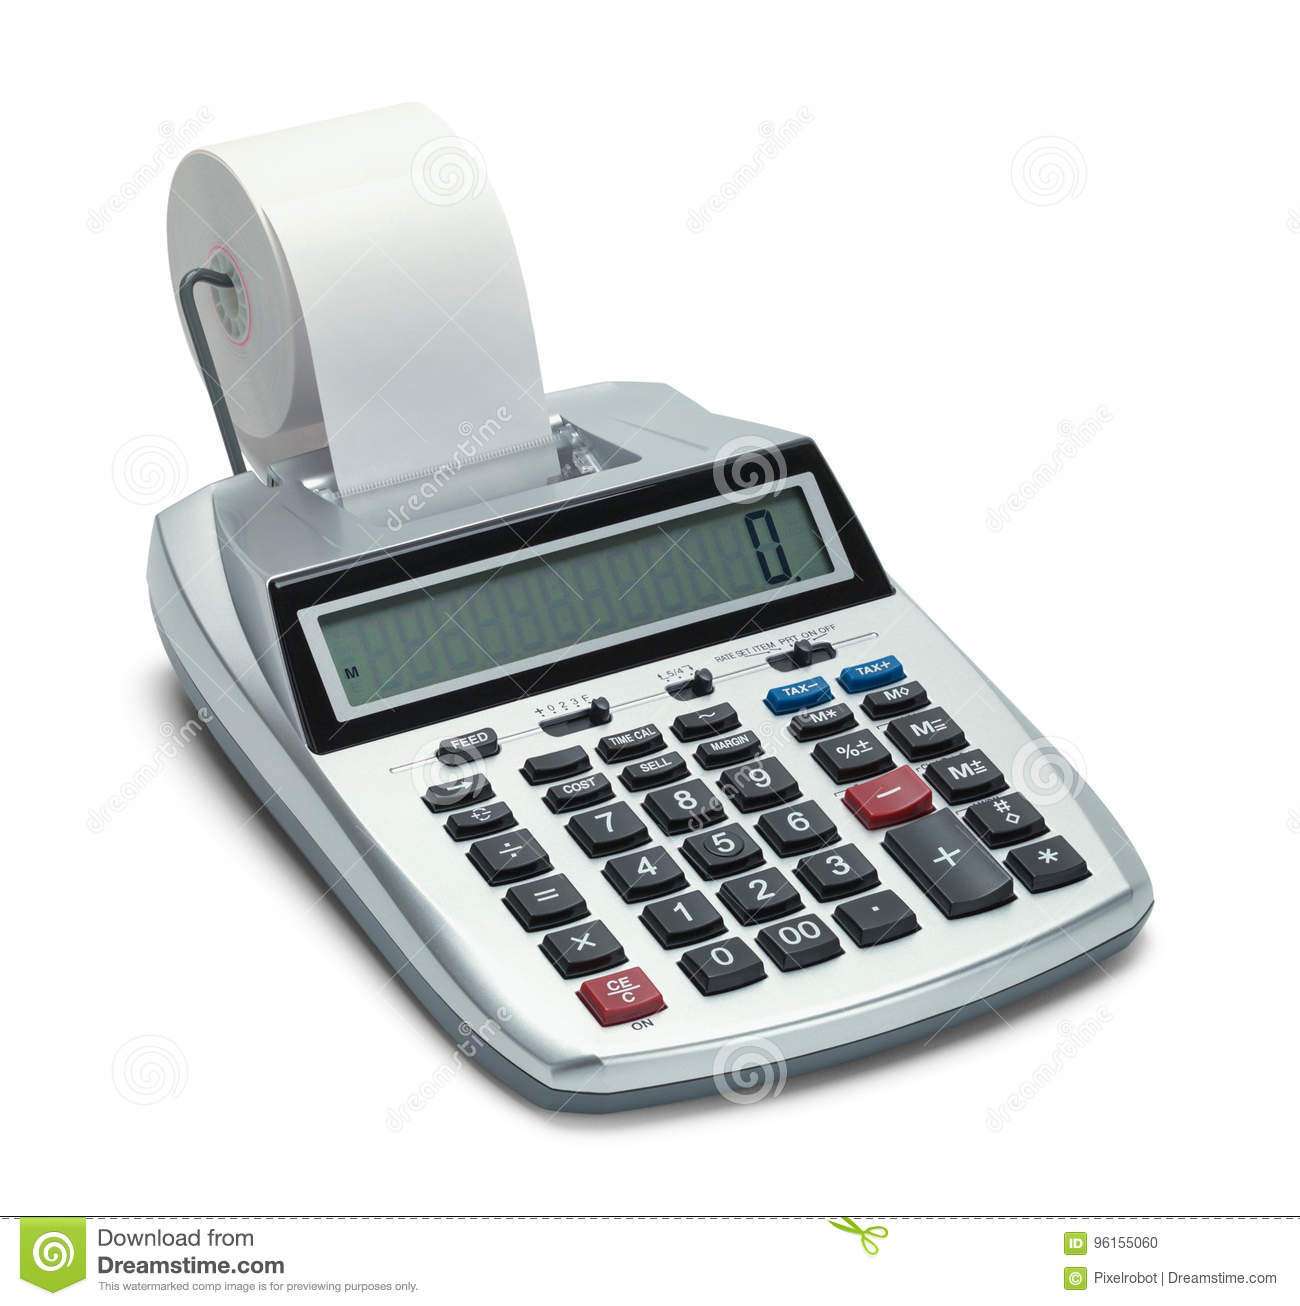 microsoft calculator with tape